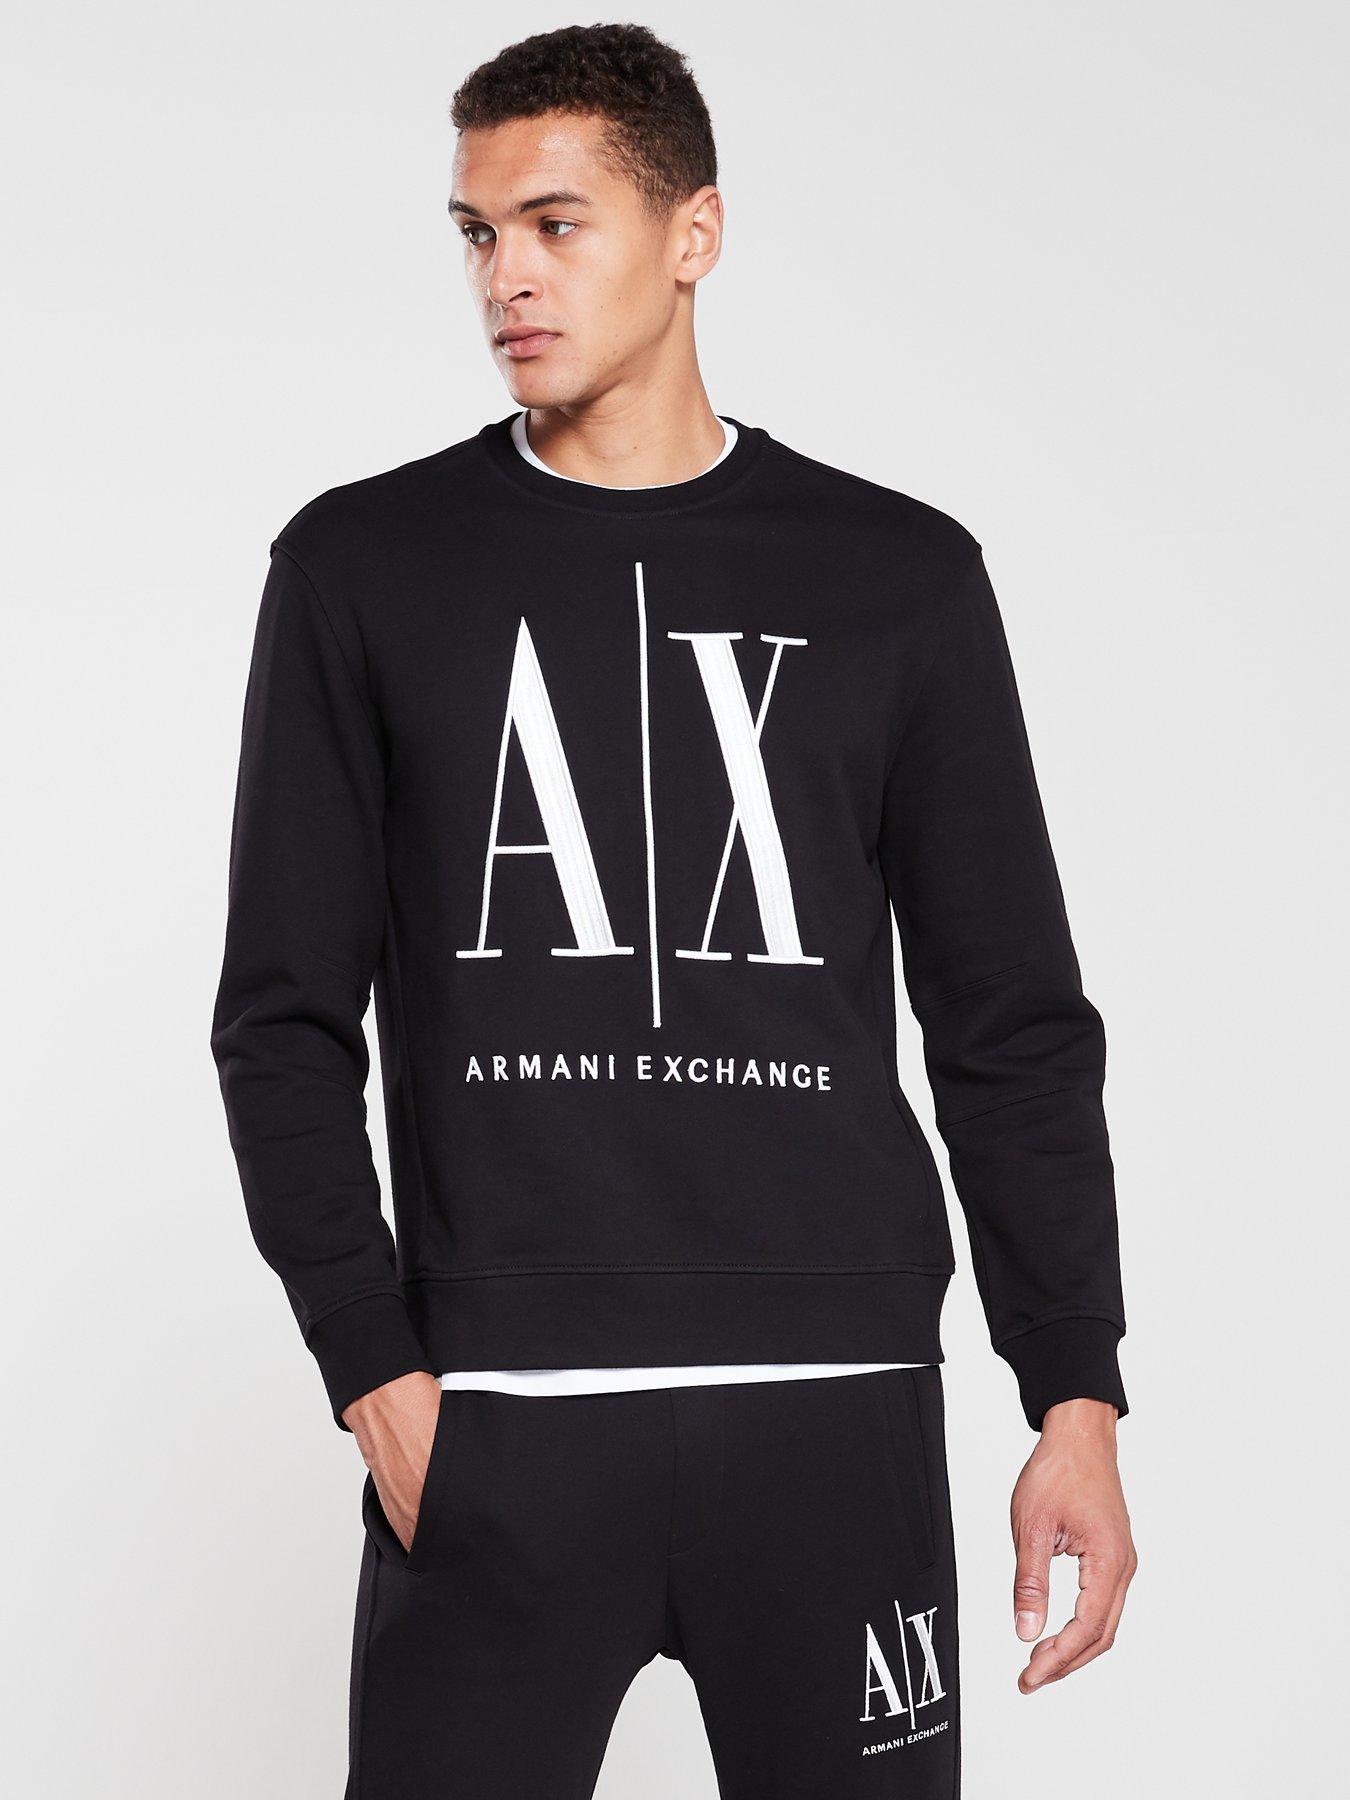 Introducir 103+ imagen armani exchange logo sweater